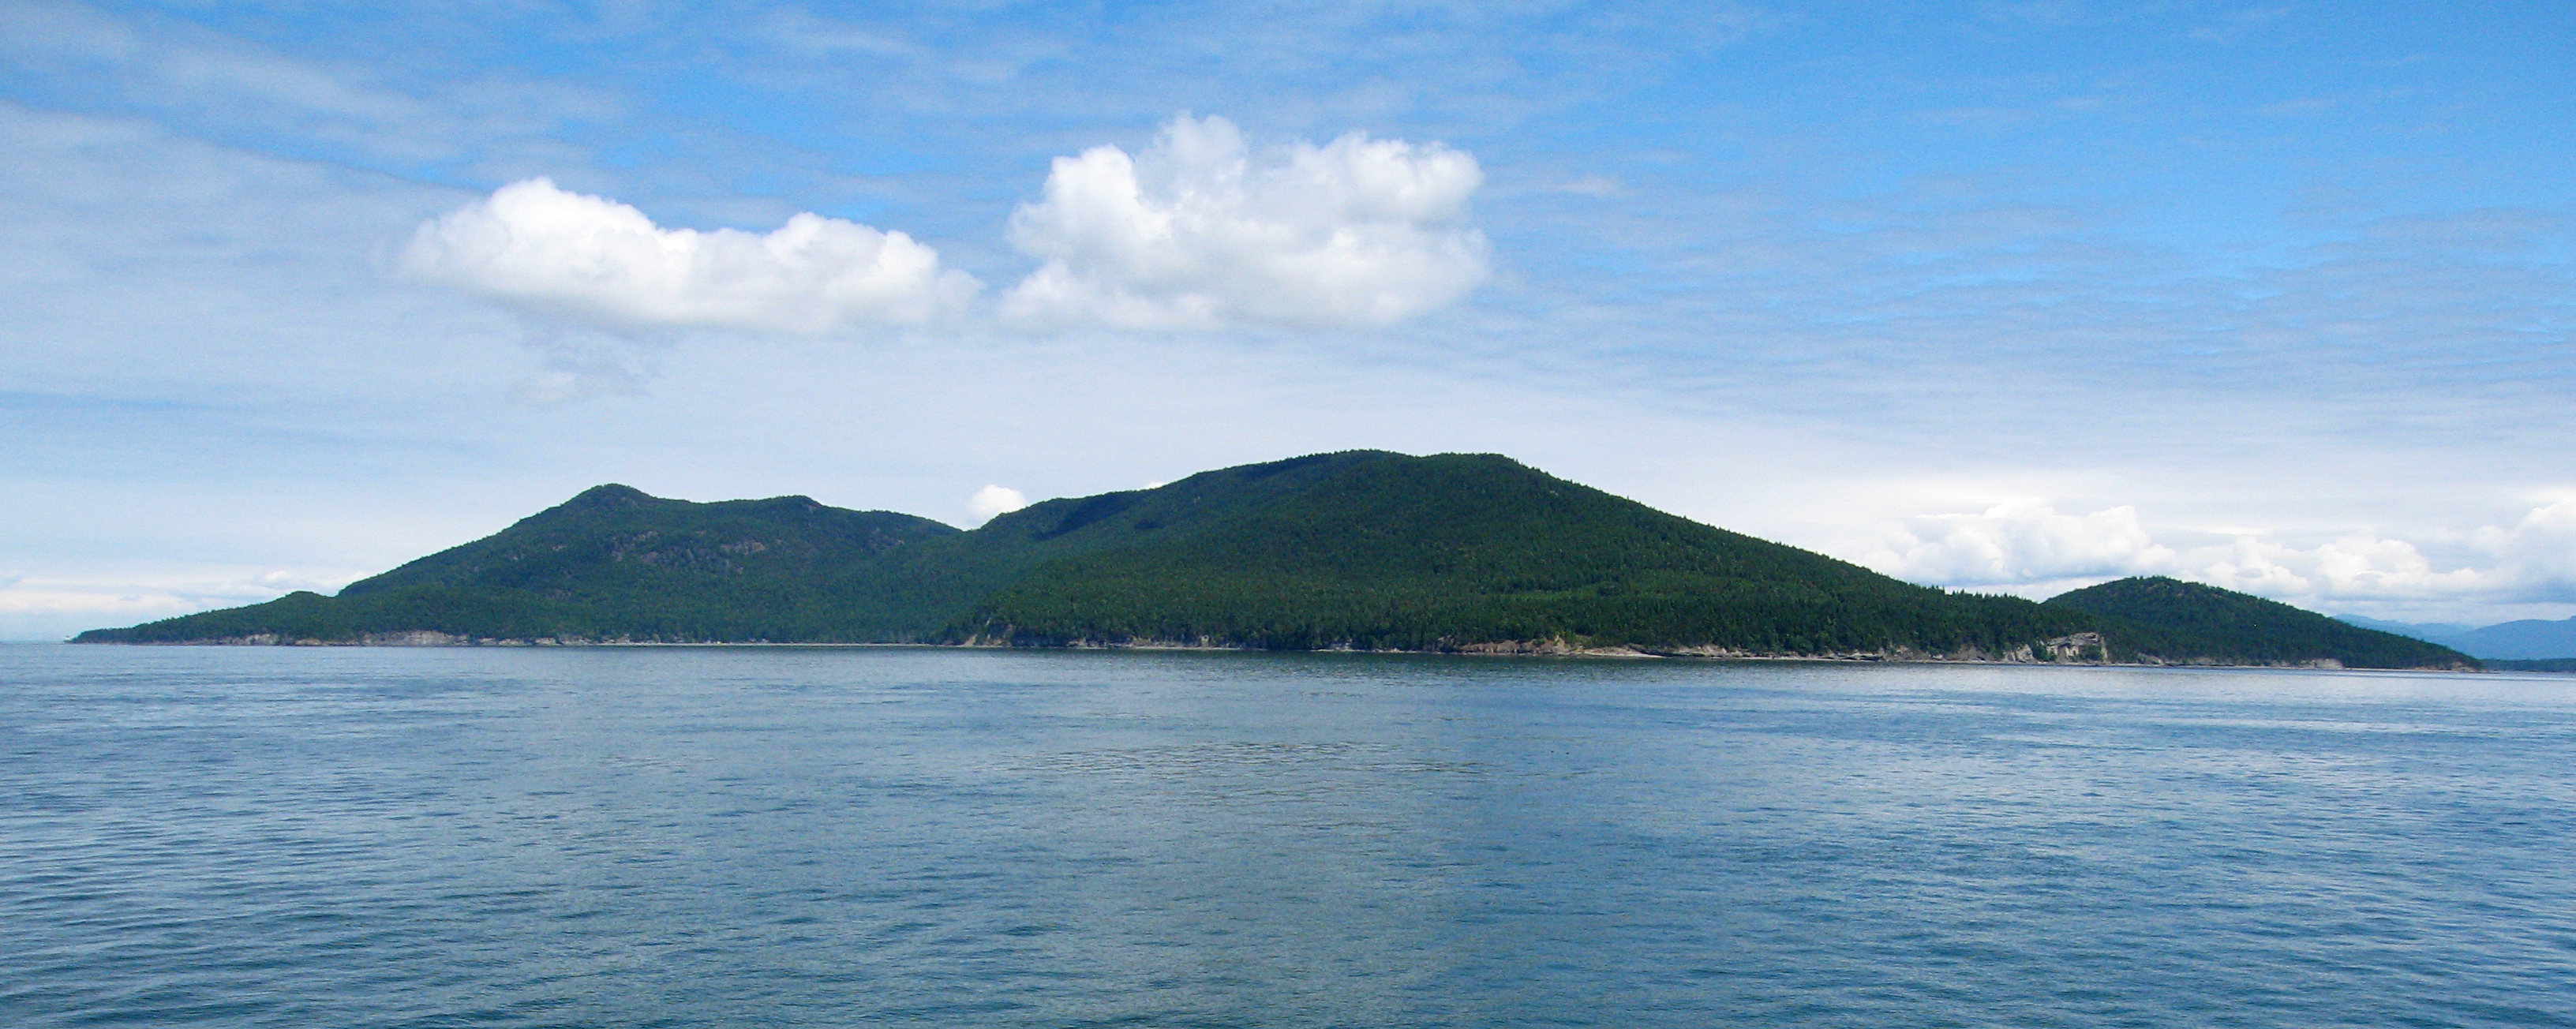 Cypress Island from Rosario Strait